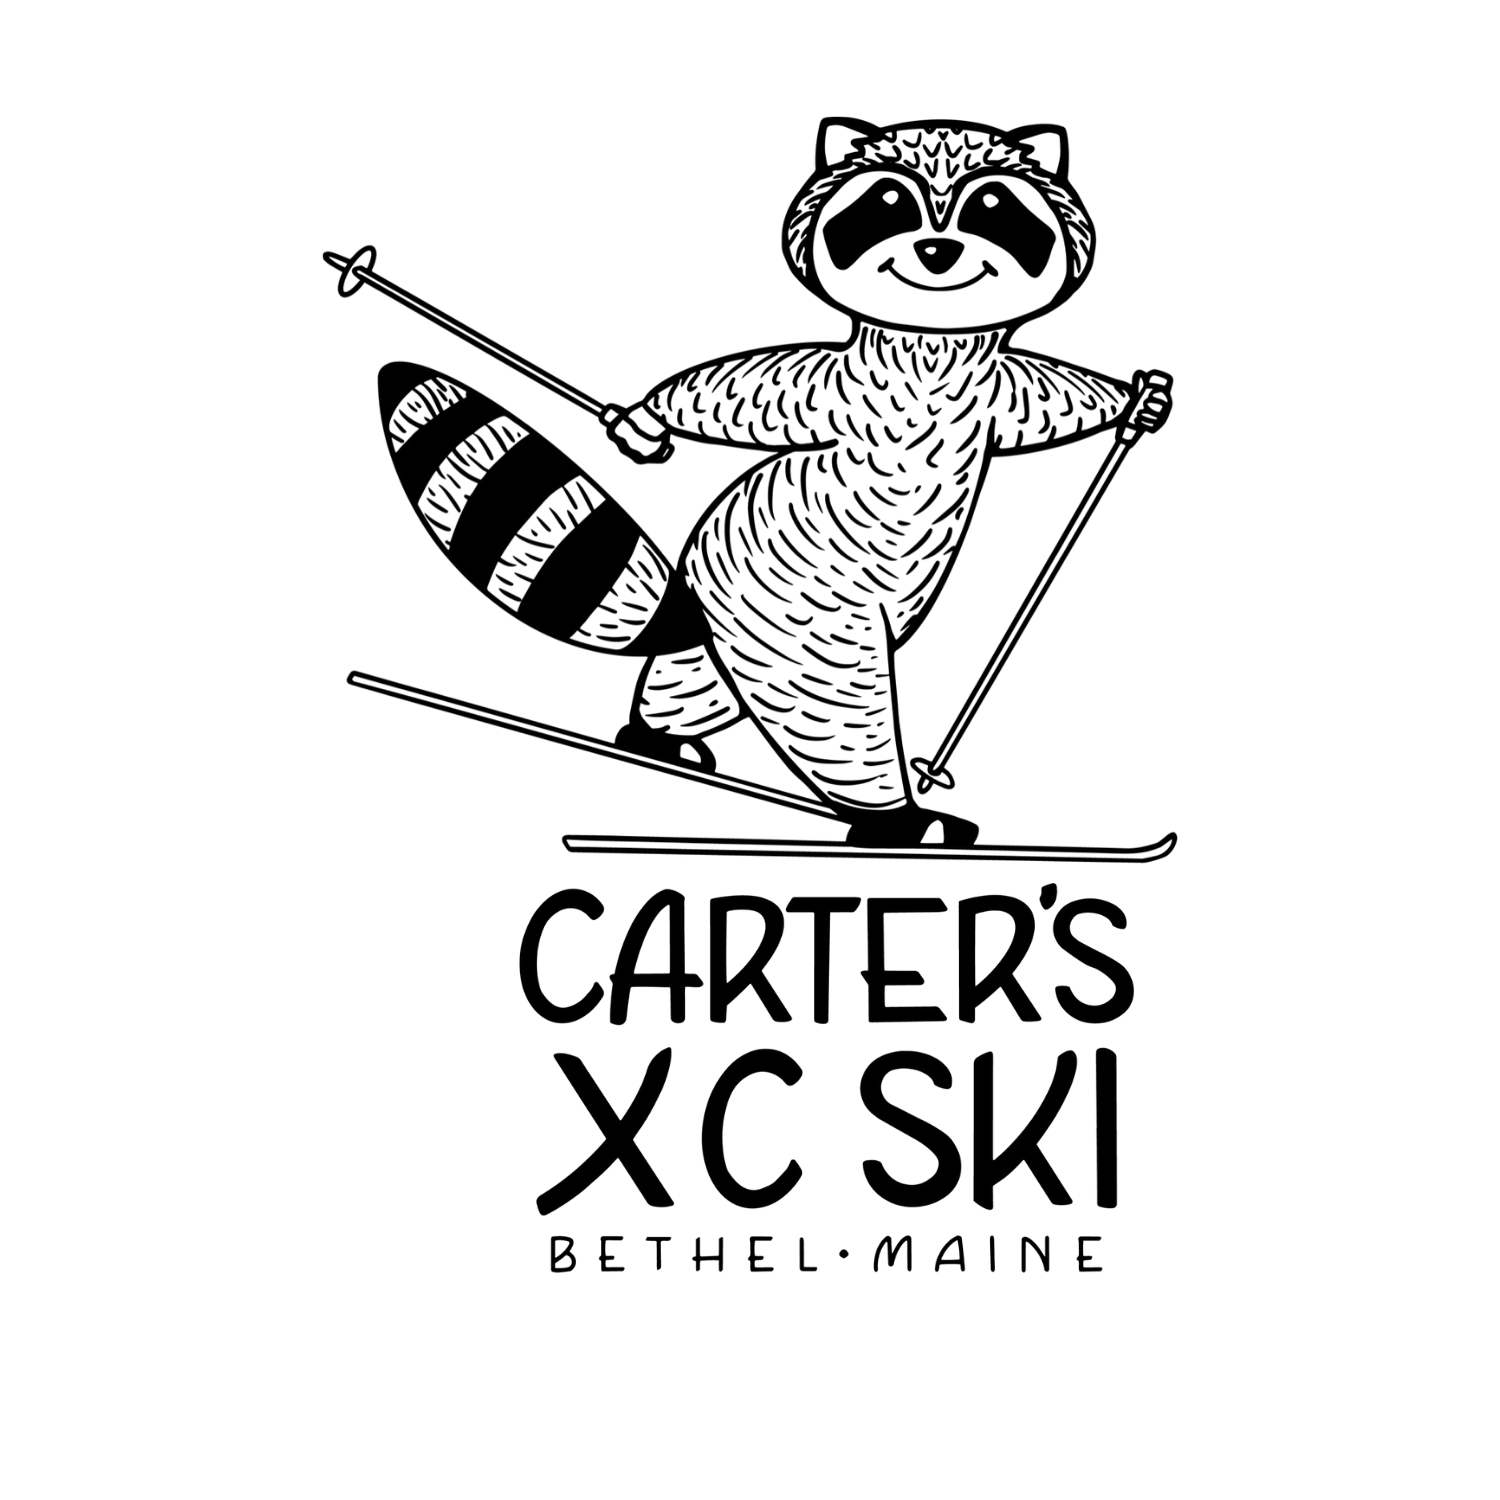 Carter's XC Ski